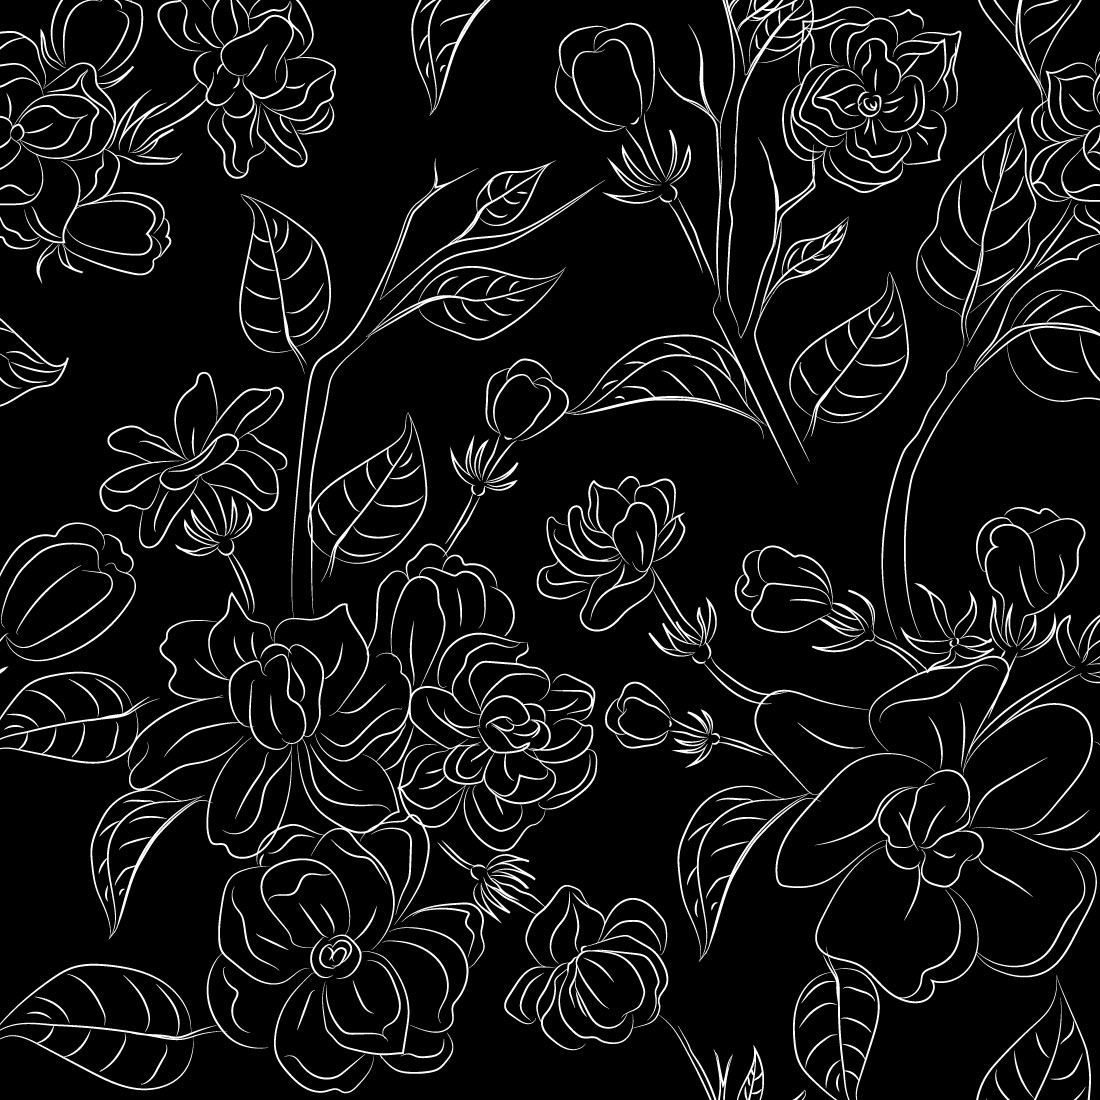 Jasmine Flower Line Art preview image.